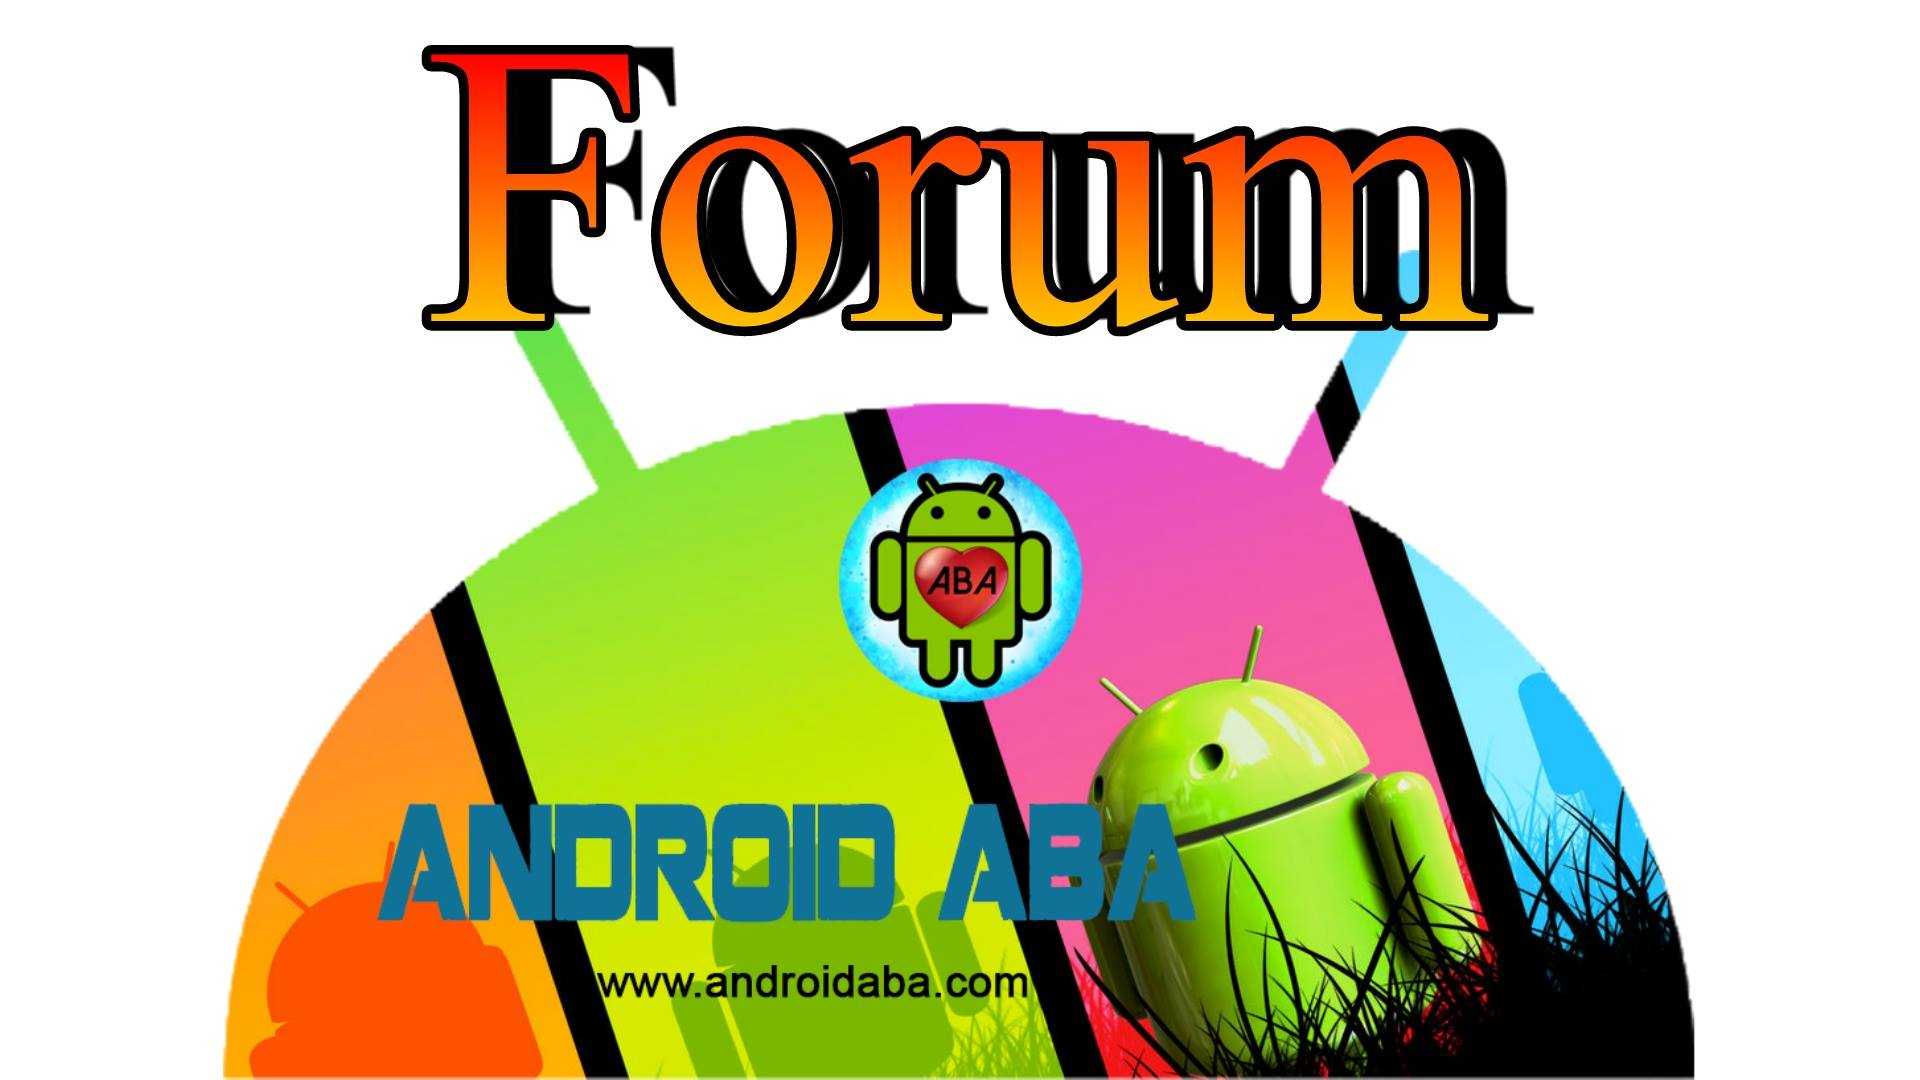 forum aba